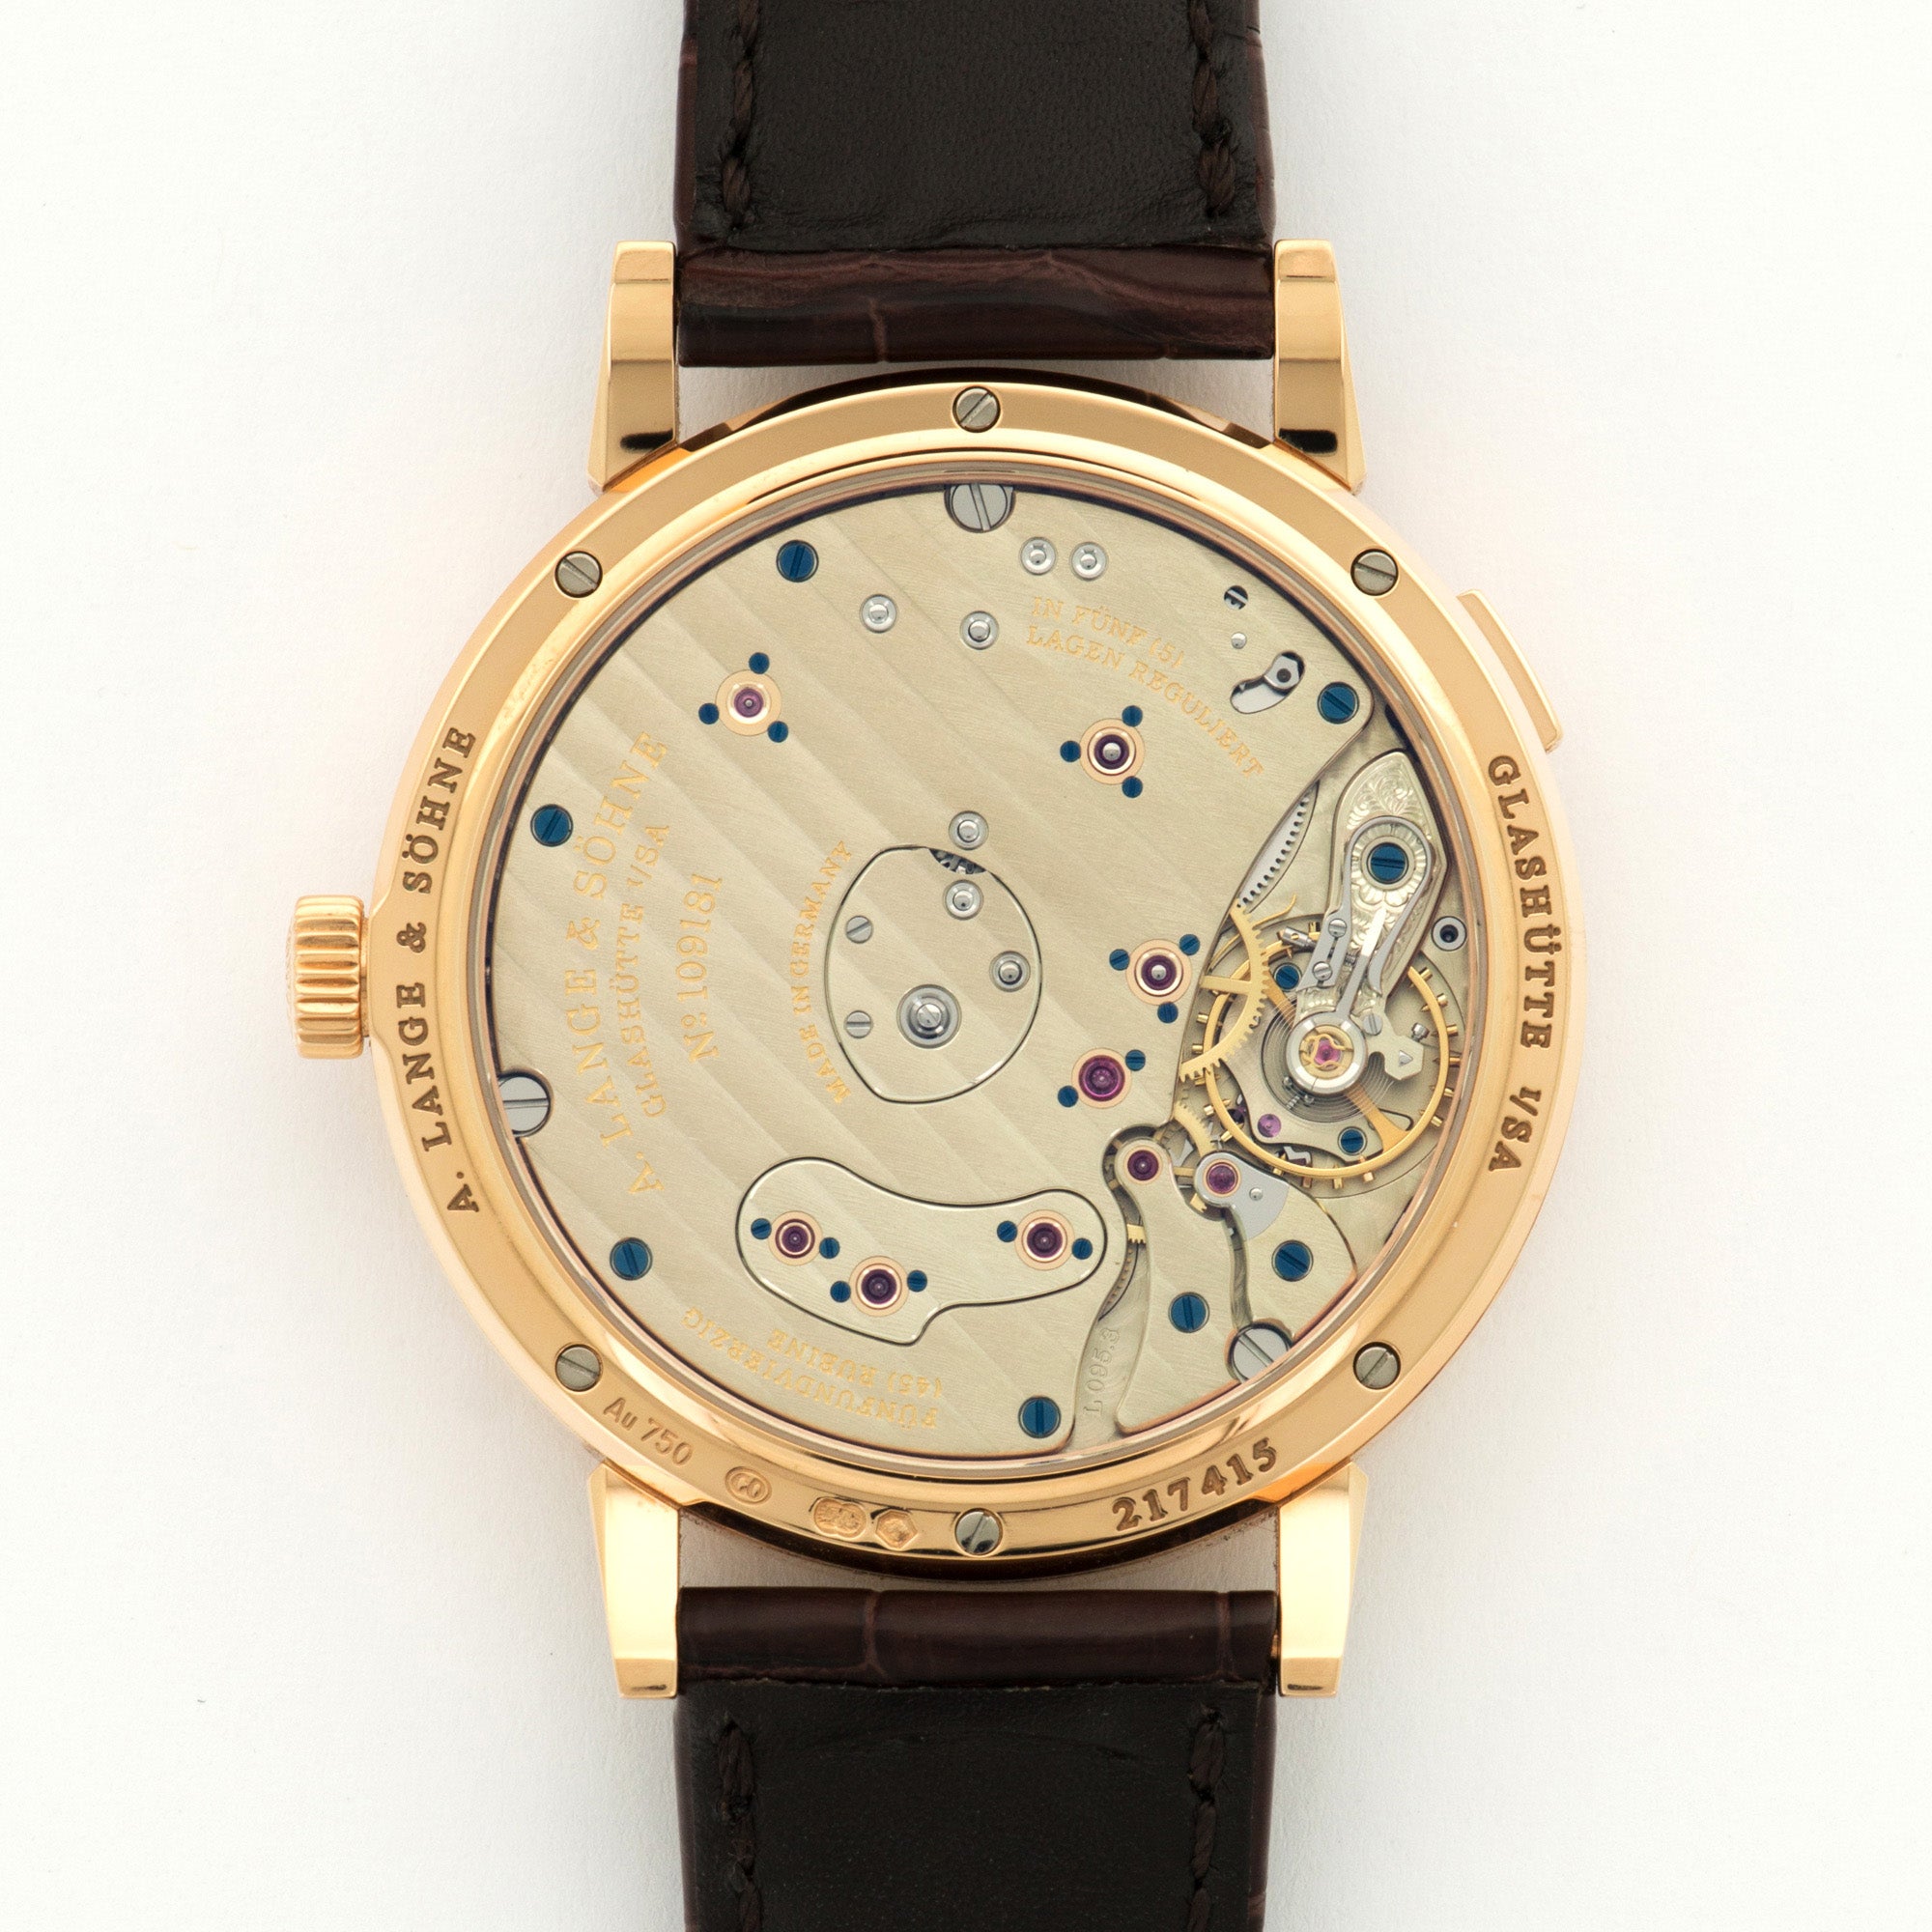 A. Lange &amp; Sohne - A. Lange &amp; Sohne Rose Gold Grand Lange 1 Moonphase Watch Ref. 139.032 - The Keystone Watches